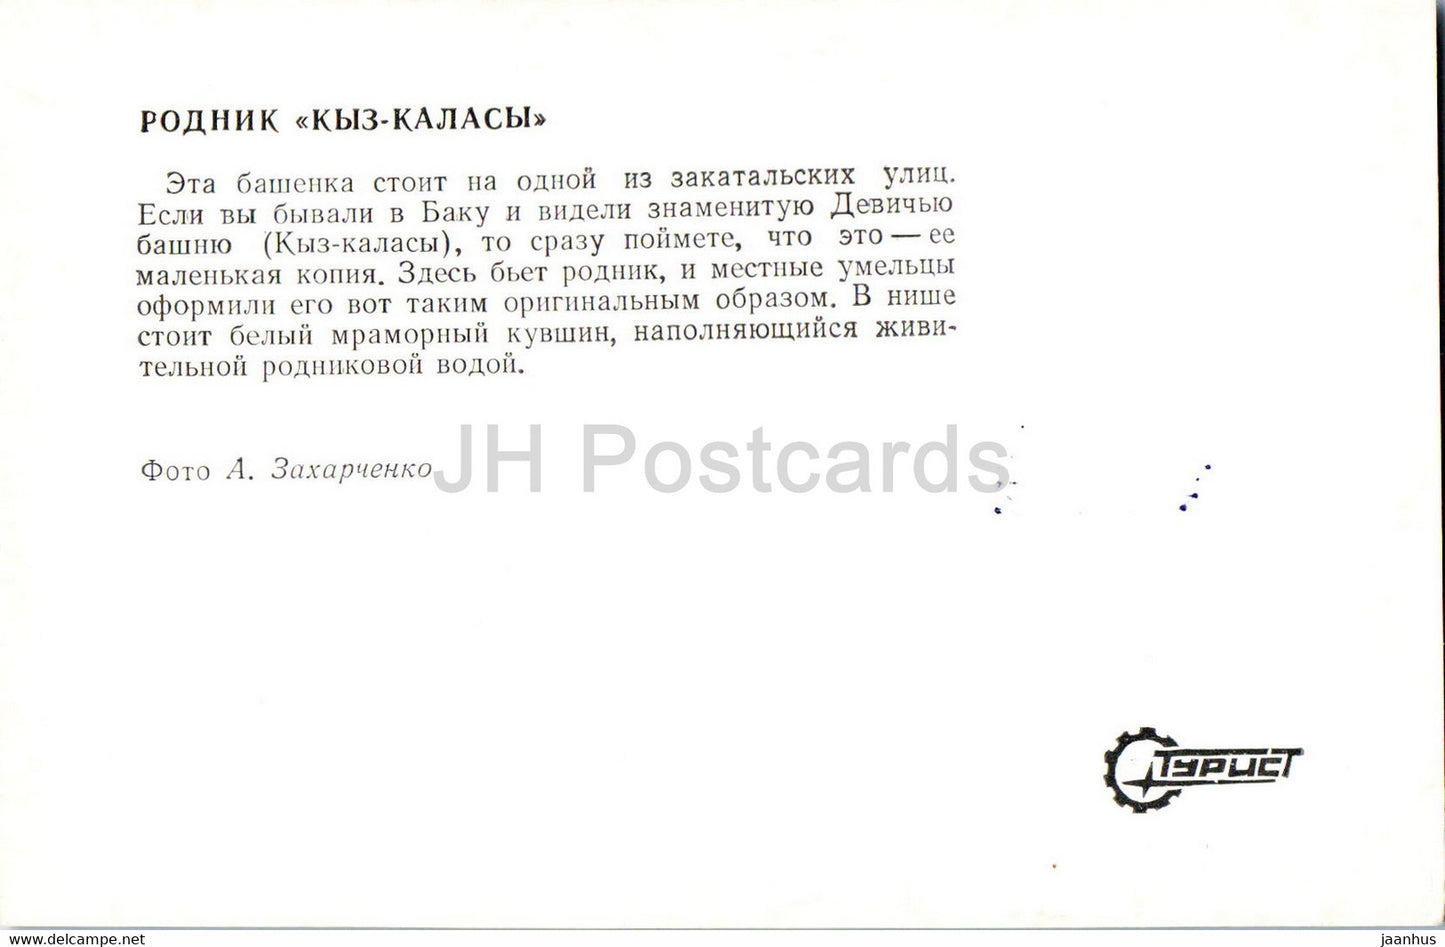 Zaqatala - Zakatala - Zakataly - Quelle Kyz Kalasy - 1976 - Aserbaidschan UdSSR - unbenutzt